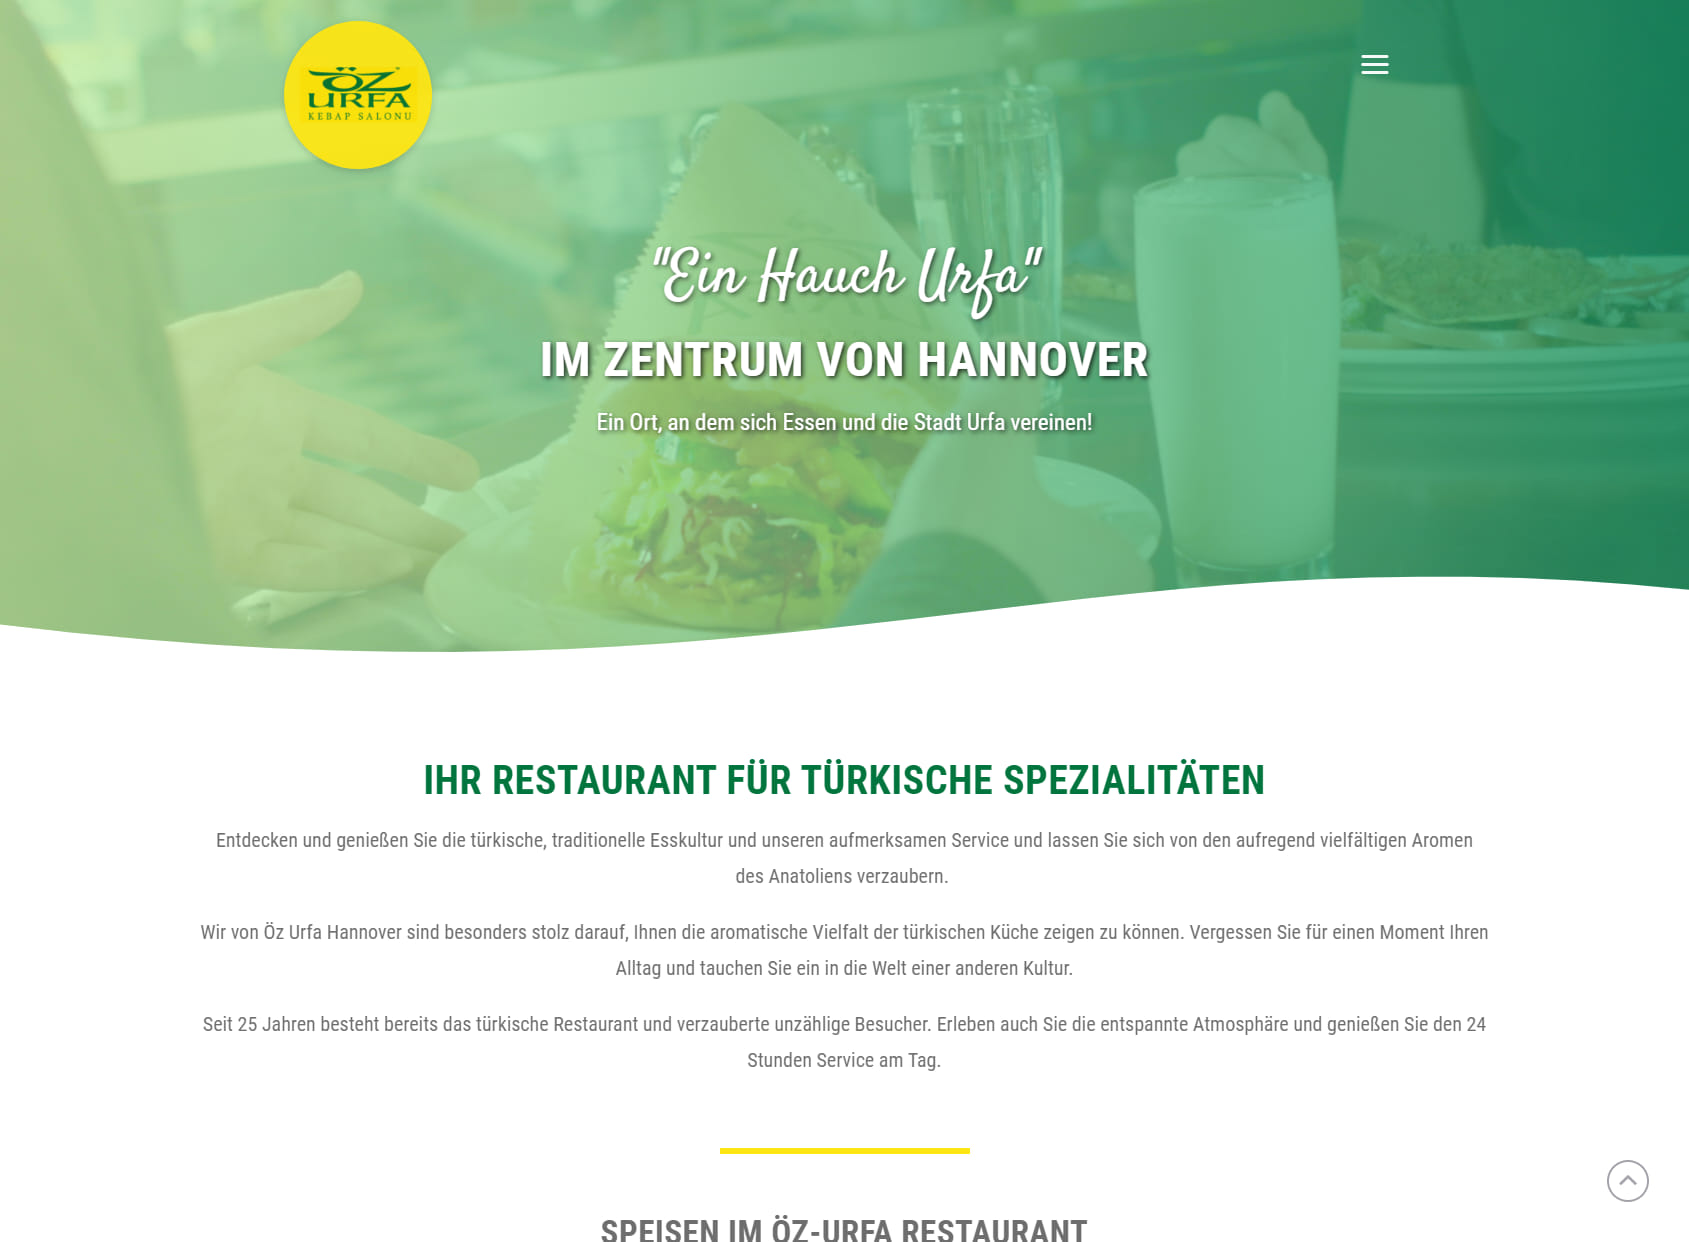 Öz Urfa, Helal Restaurant Hannover